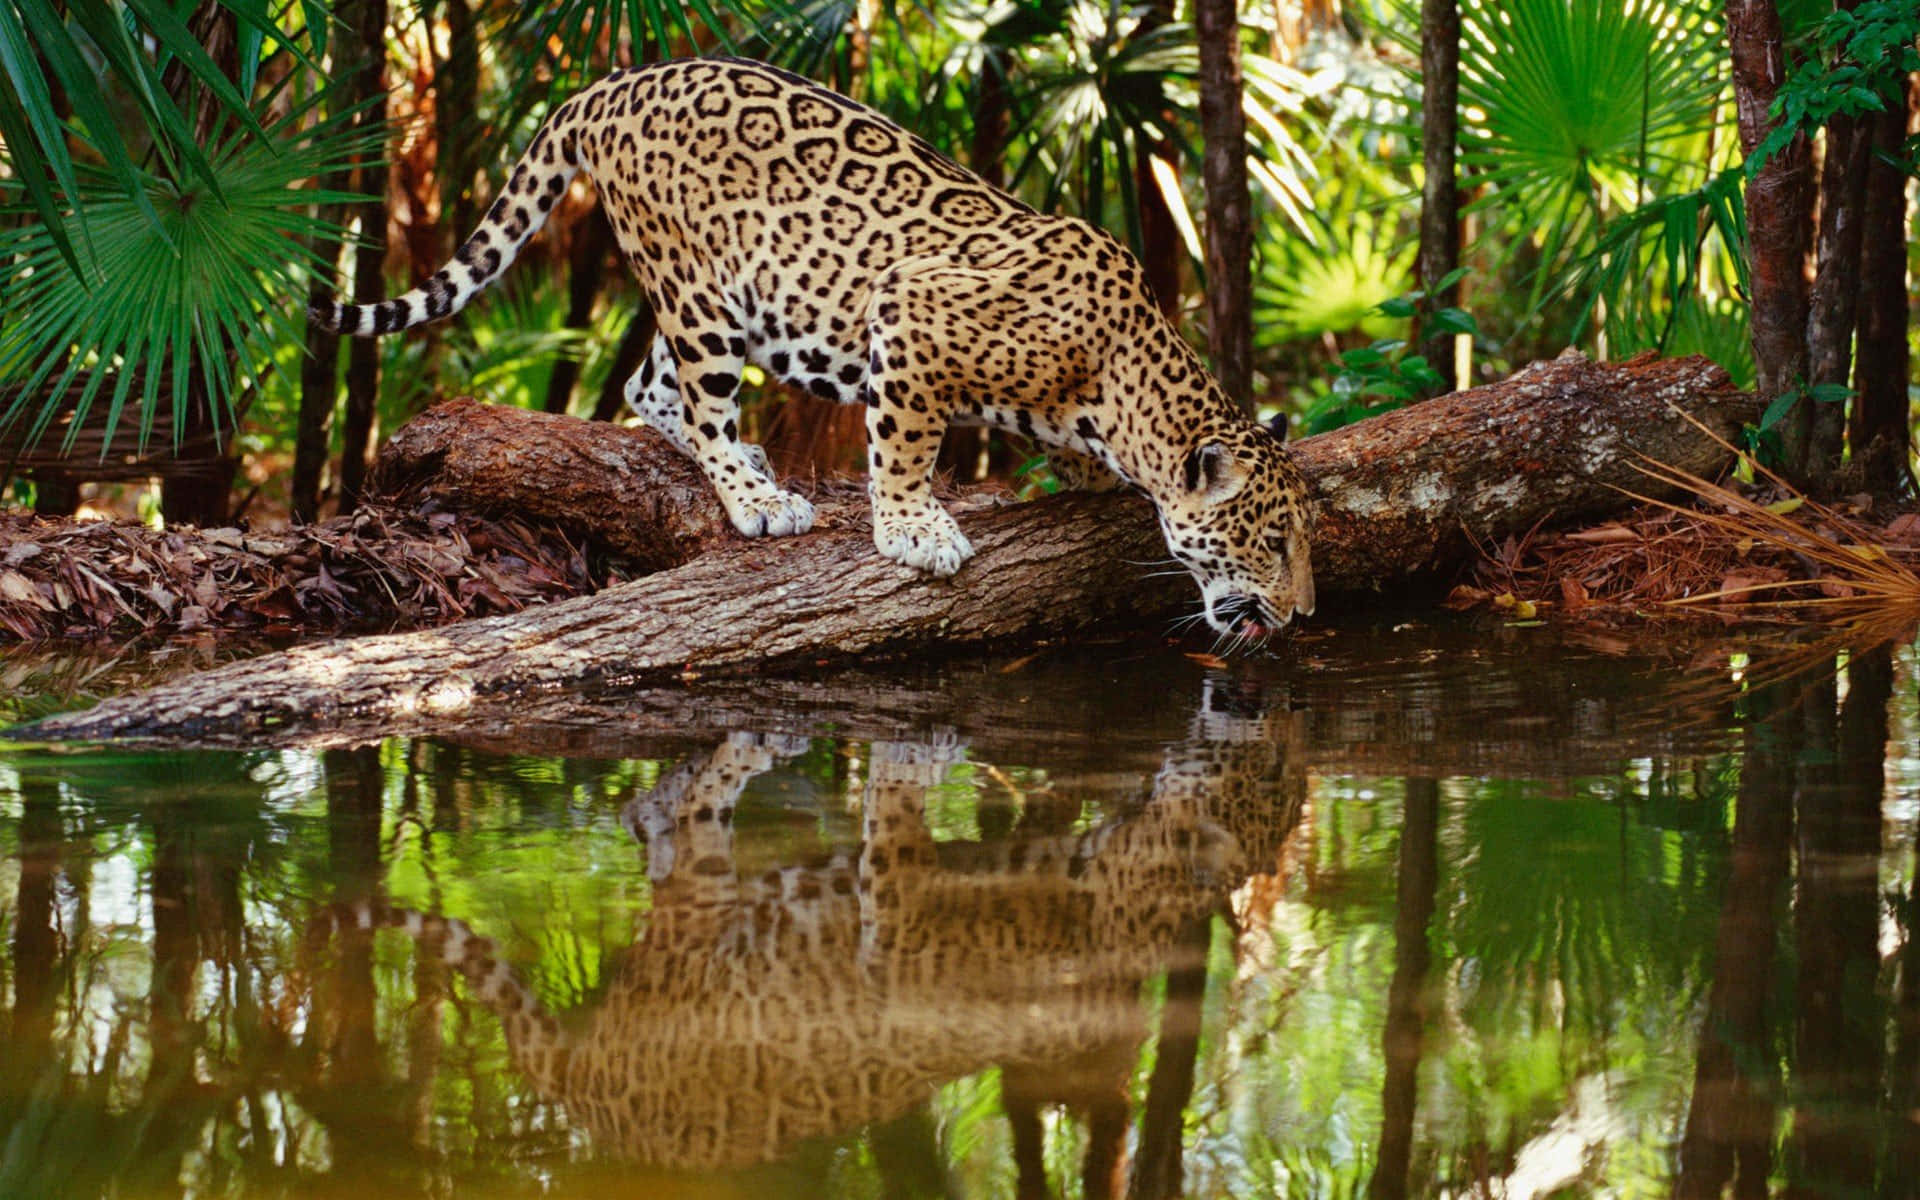 Stunning Image of Wild Animals in the Wild